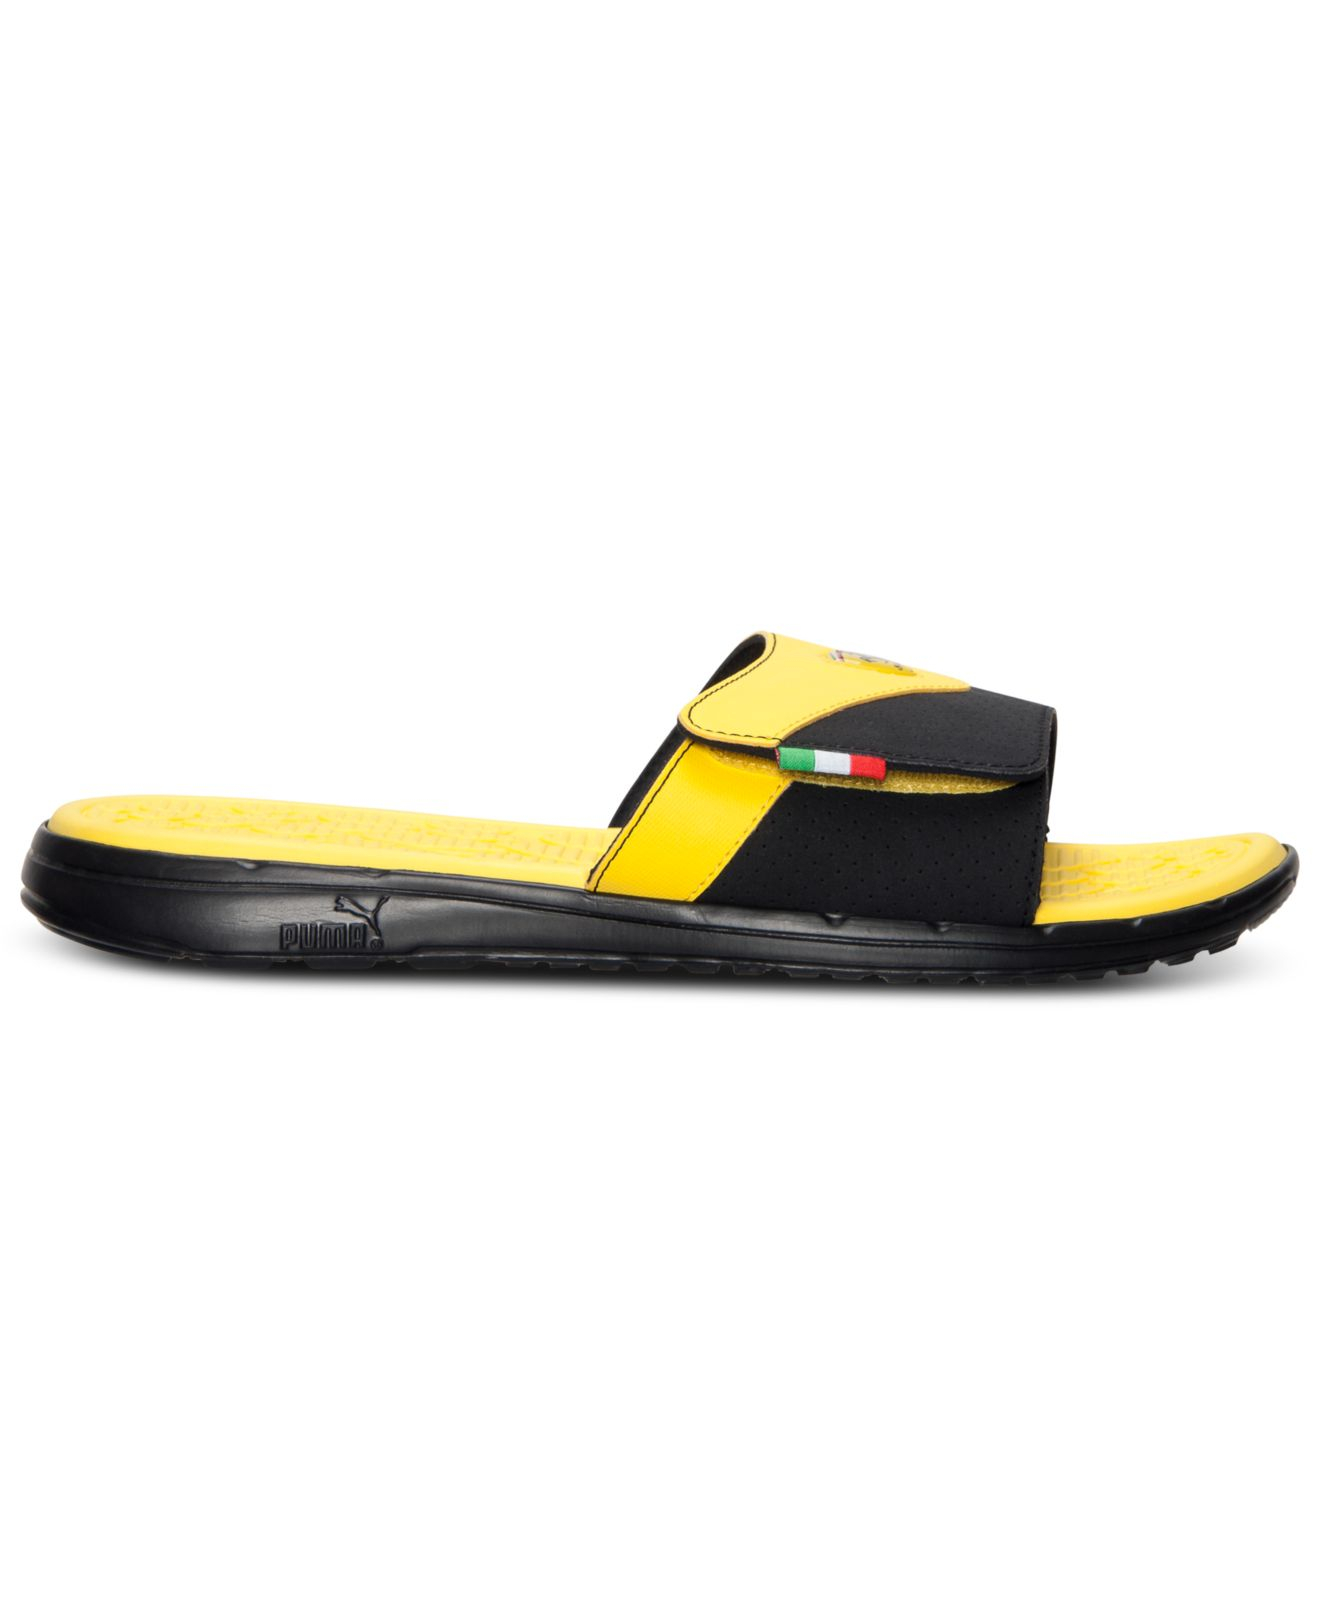 PUMA Men'S Ferrari Slide Sandals From Finish Line in Black Yellow (Yellow) for Men - Lyst